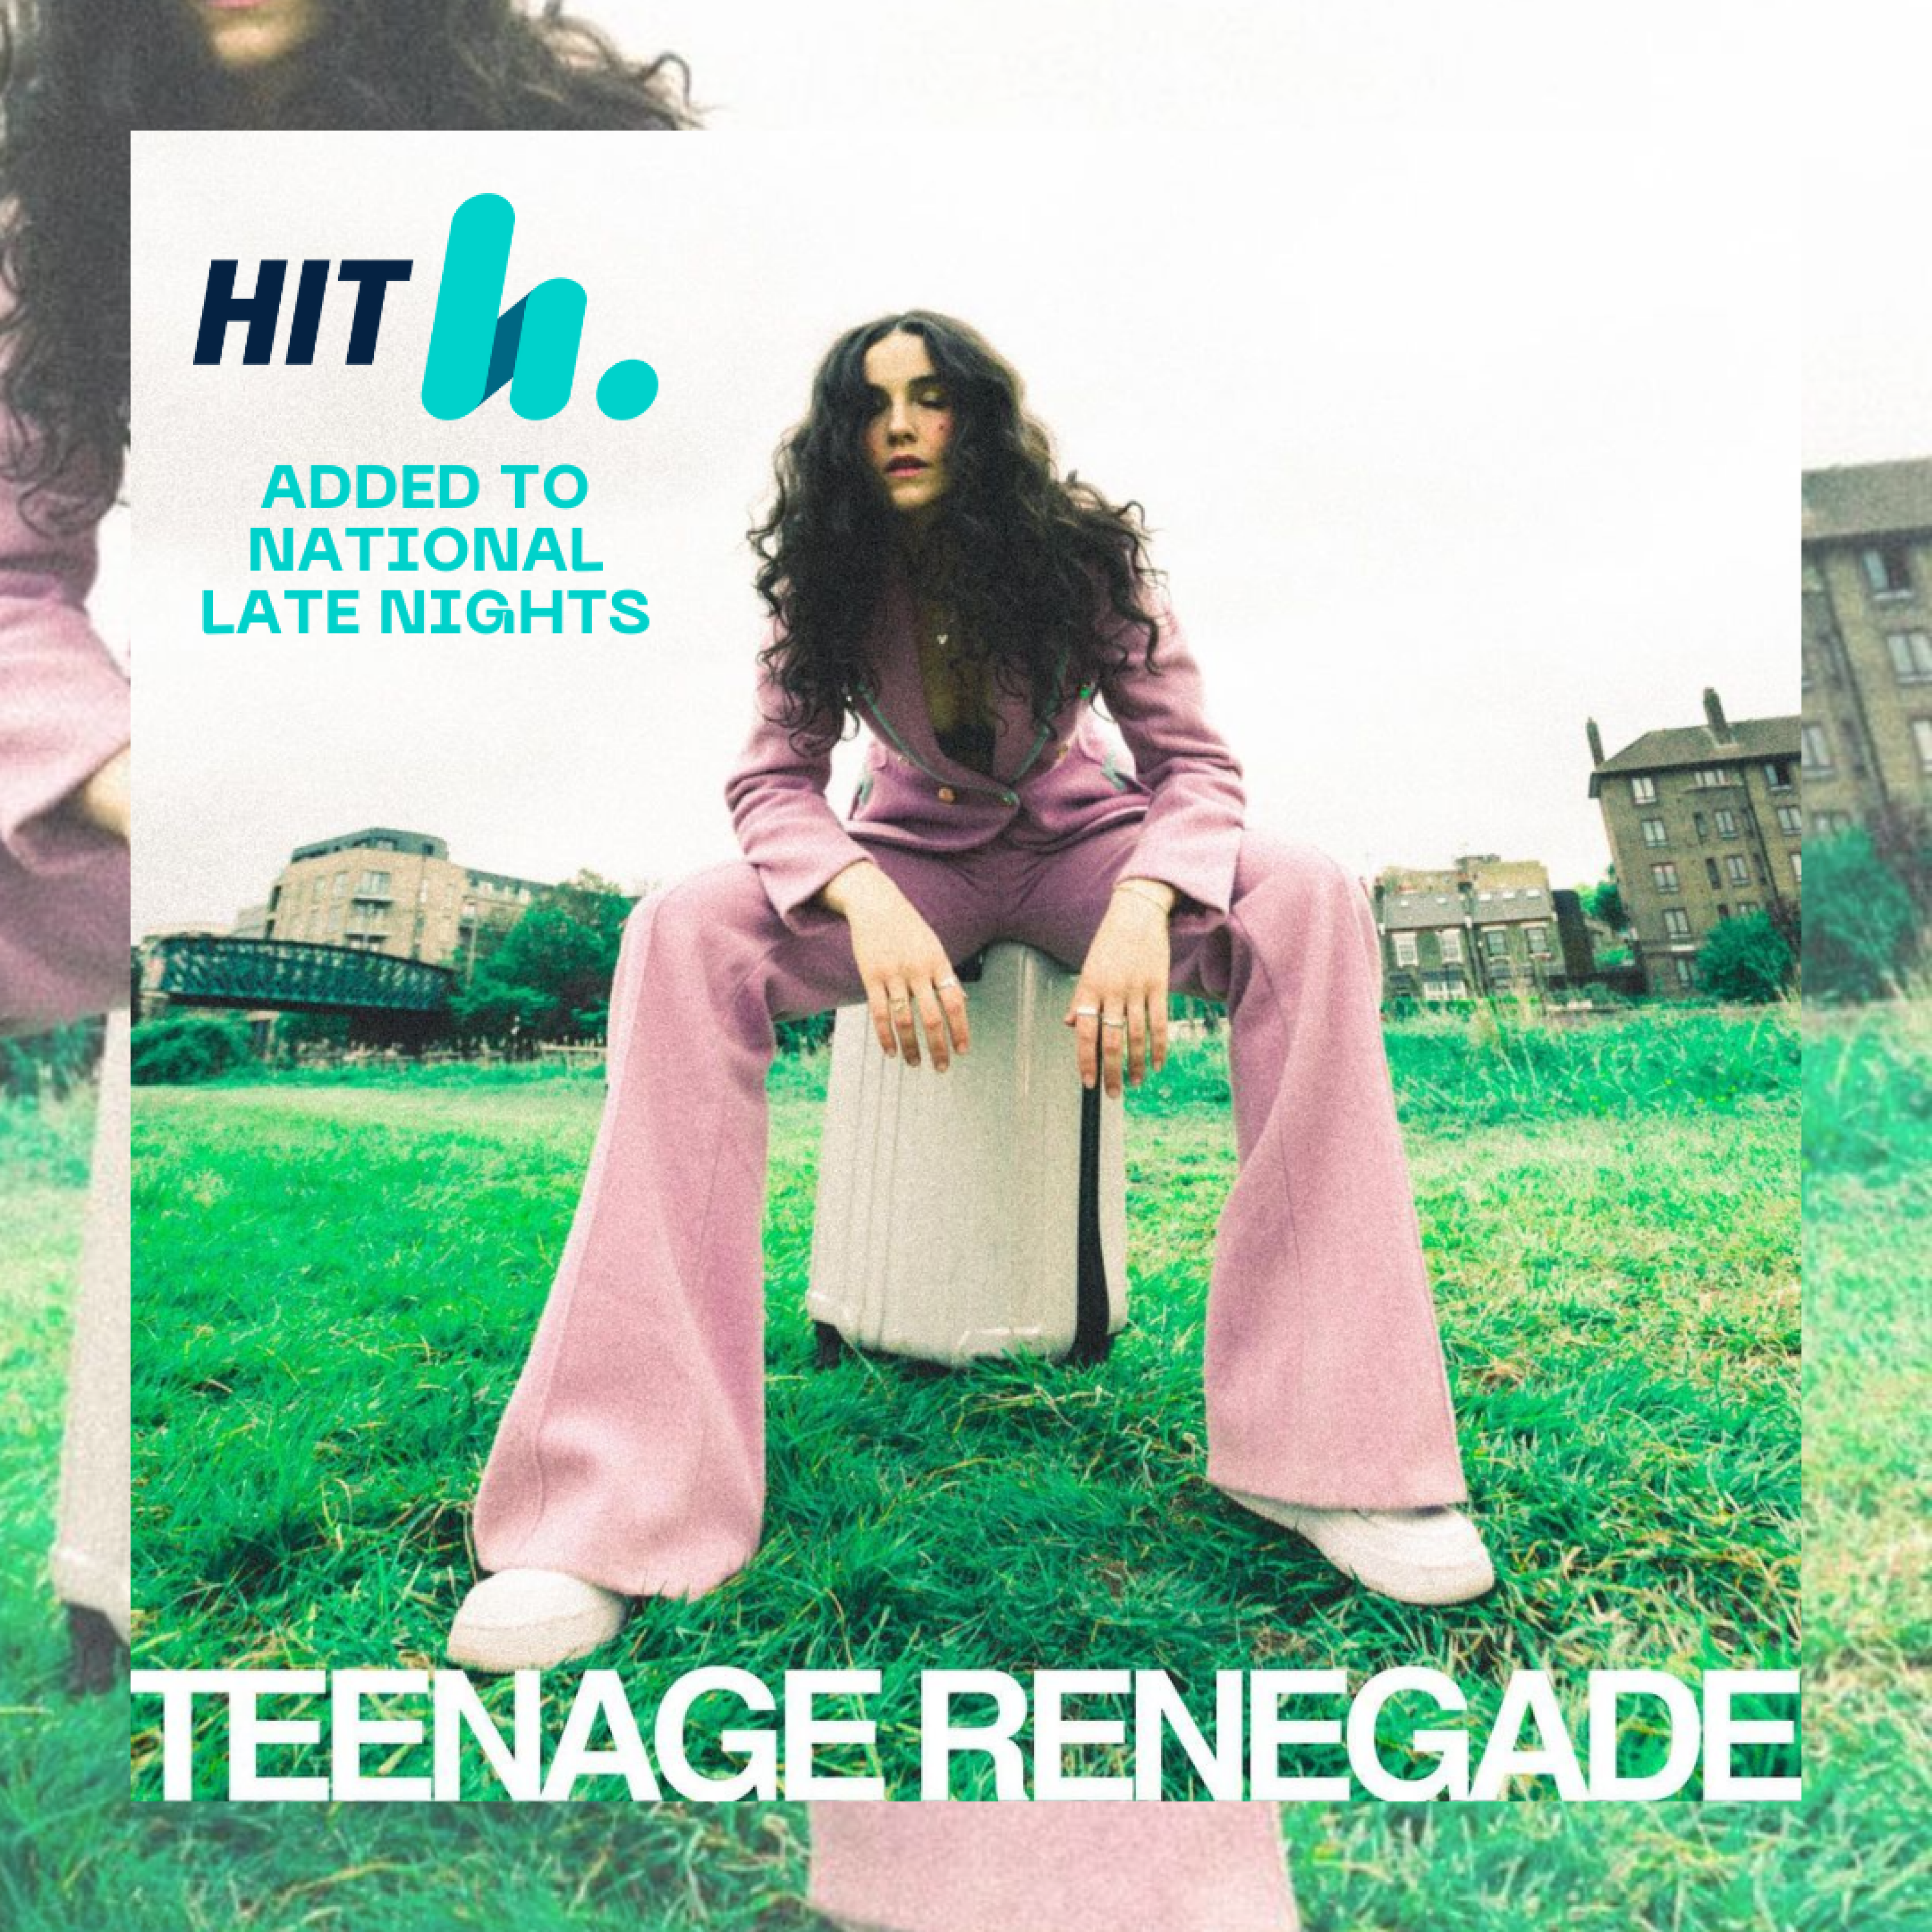 Robinson - 'Teenage Renegade' Added to HIT's National Late Nights program